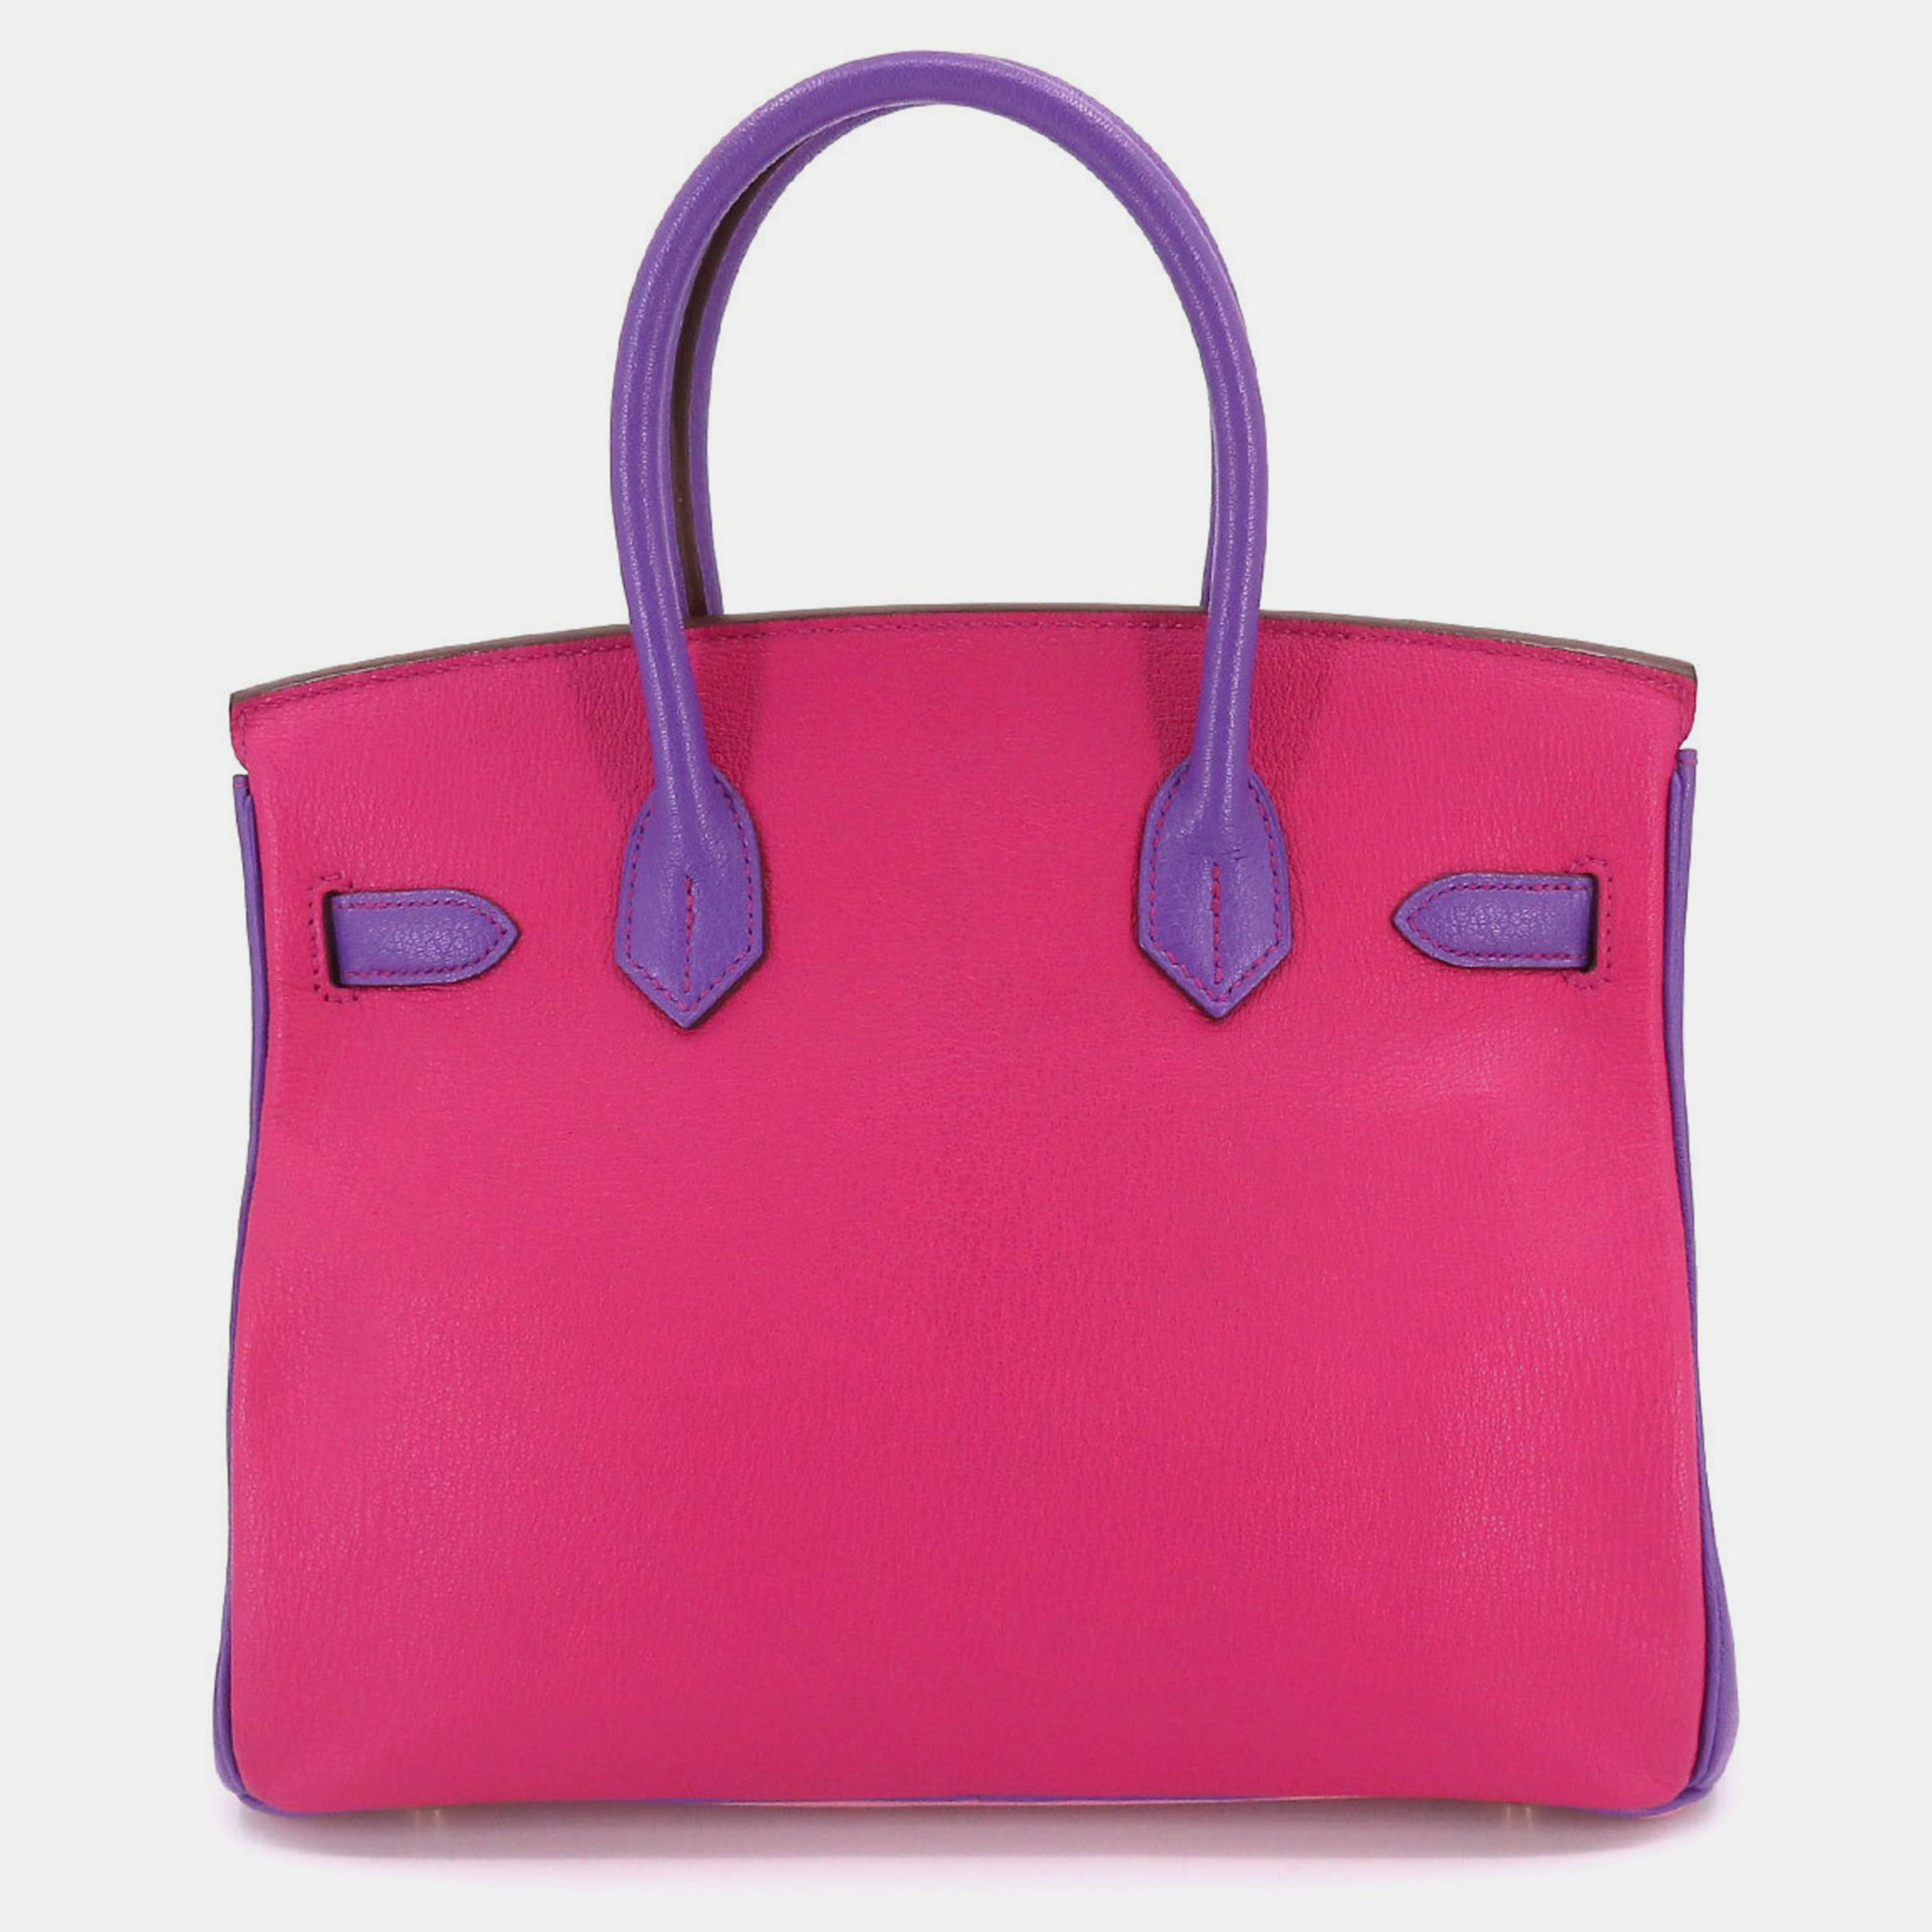 HERMES Birkin 30 Personal SPO Hand Bag Chevre Pink Rose Shocking Palm P Engraved